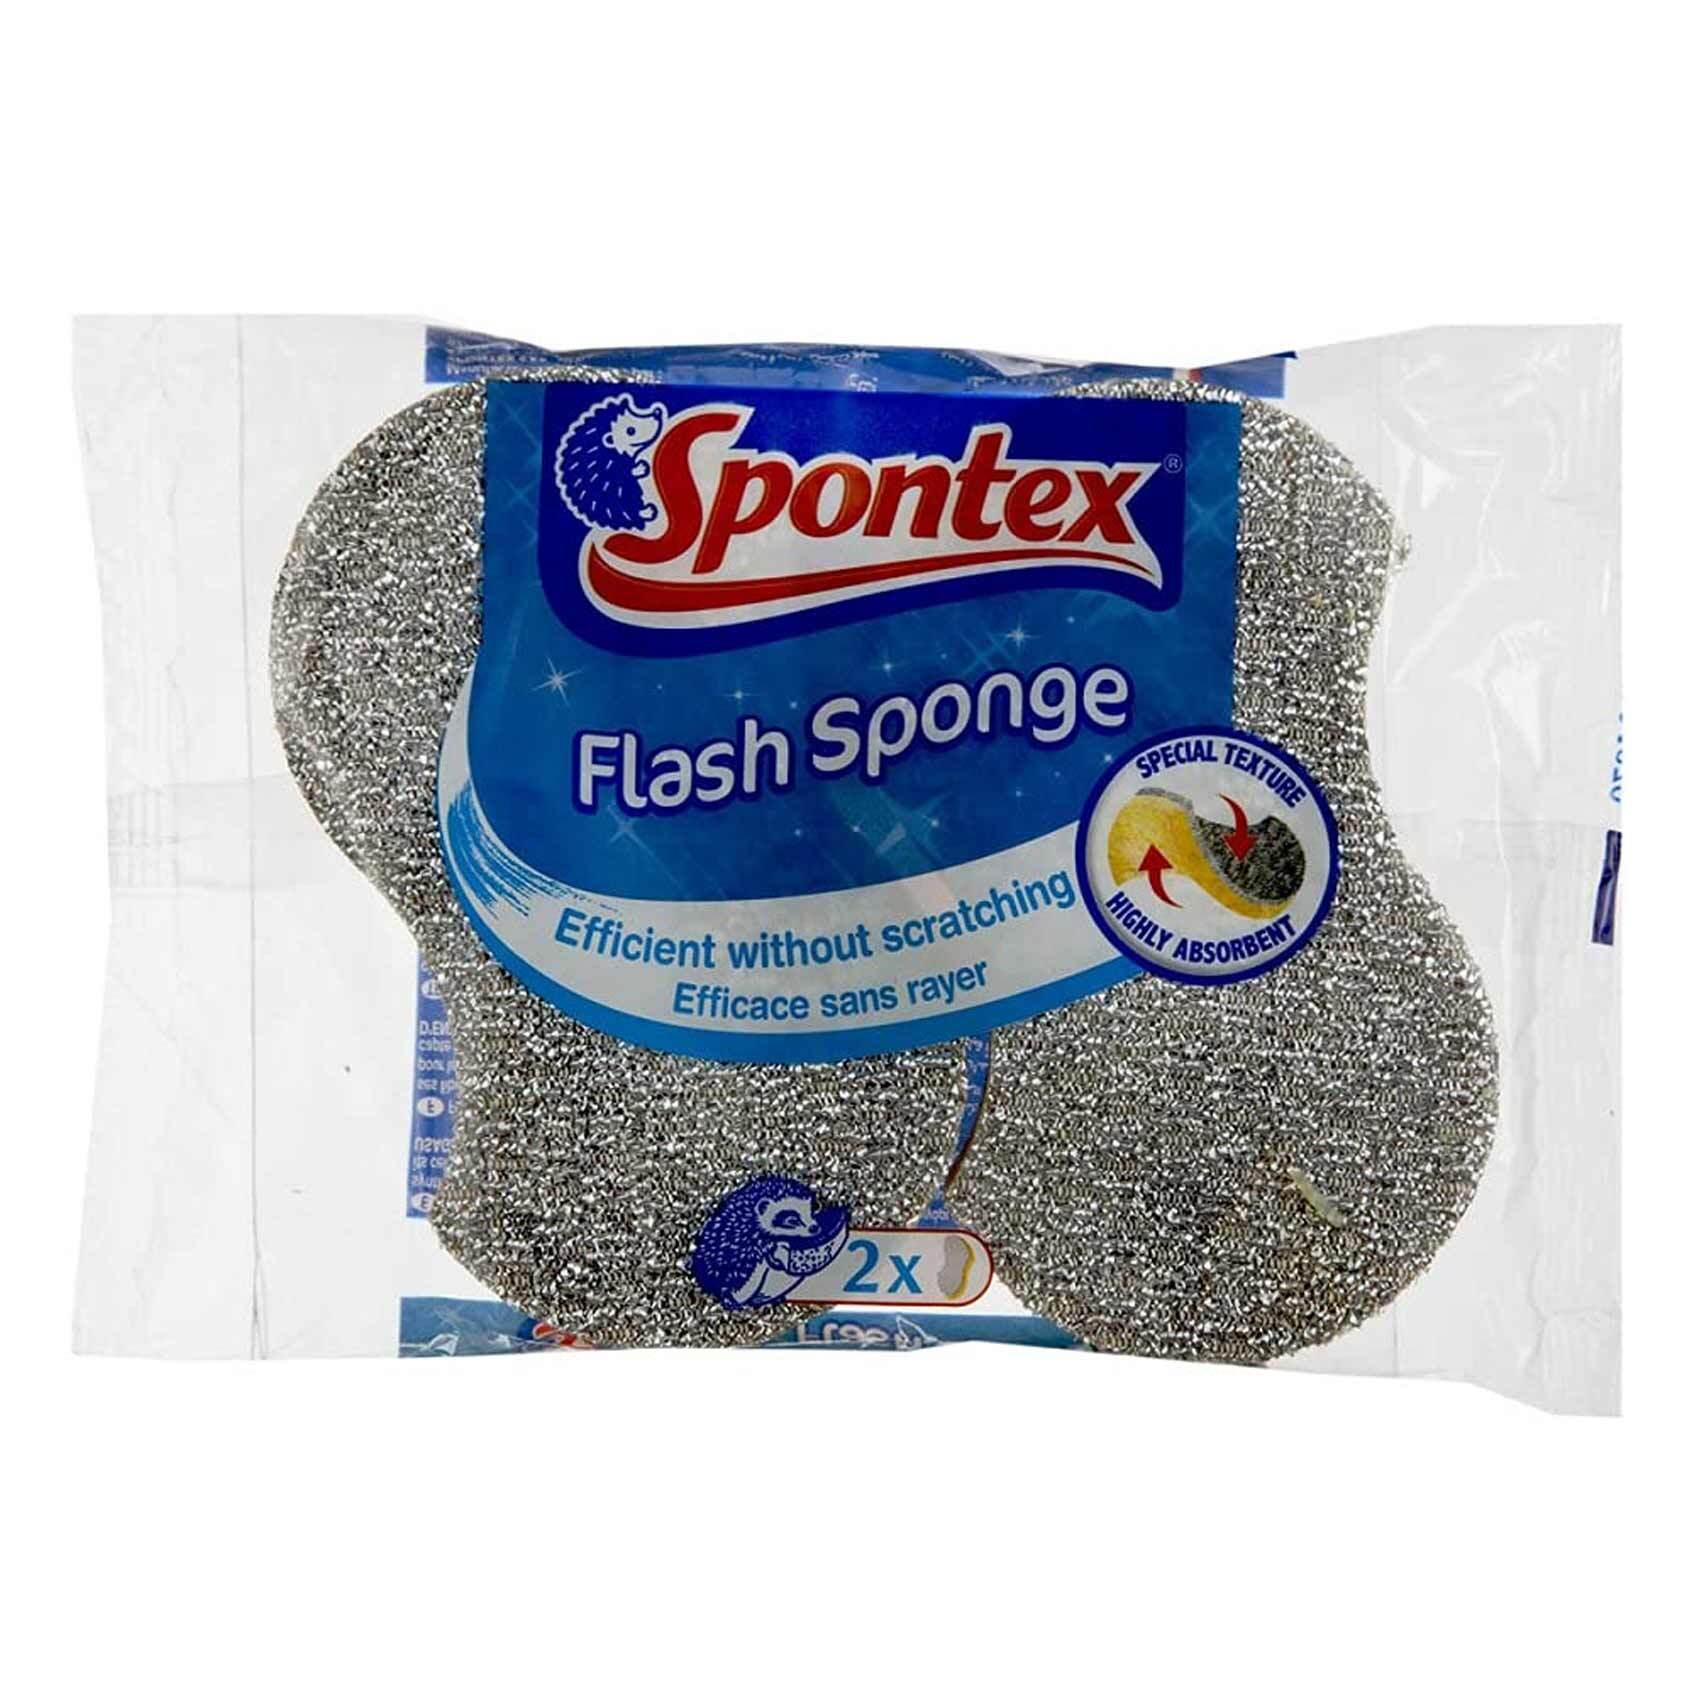 SPONTEX Flash Sponge - 2 Count (Pack of1)